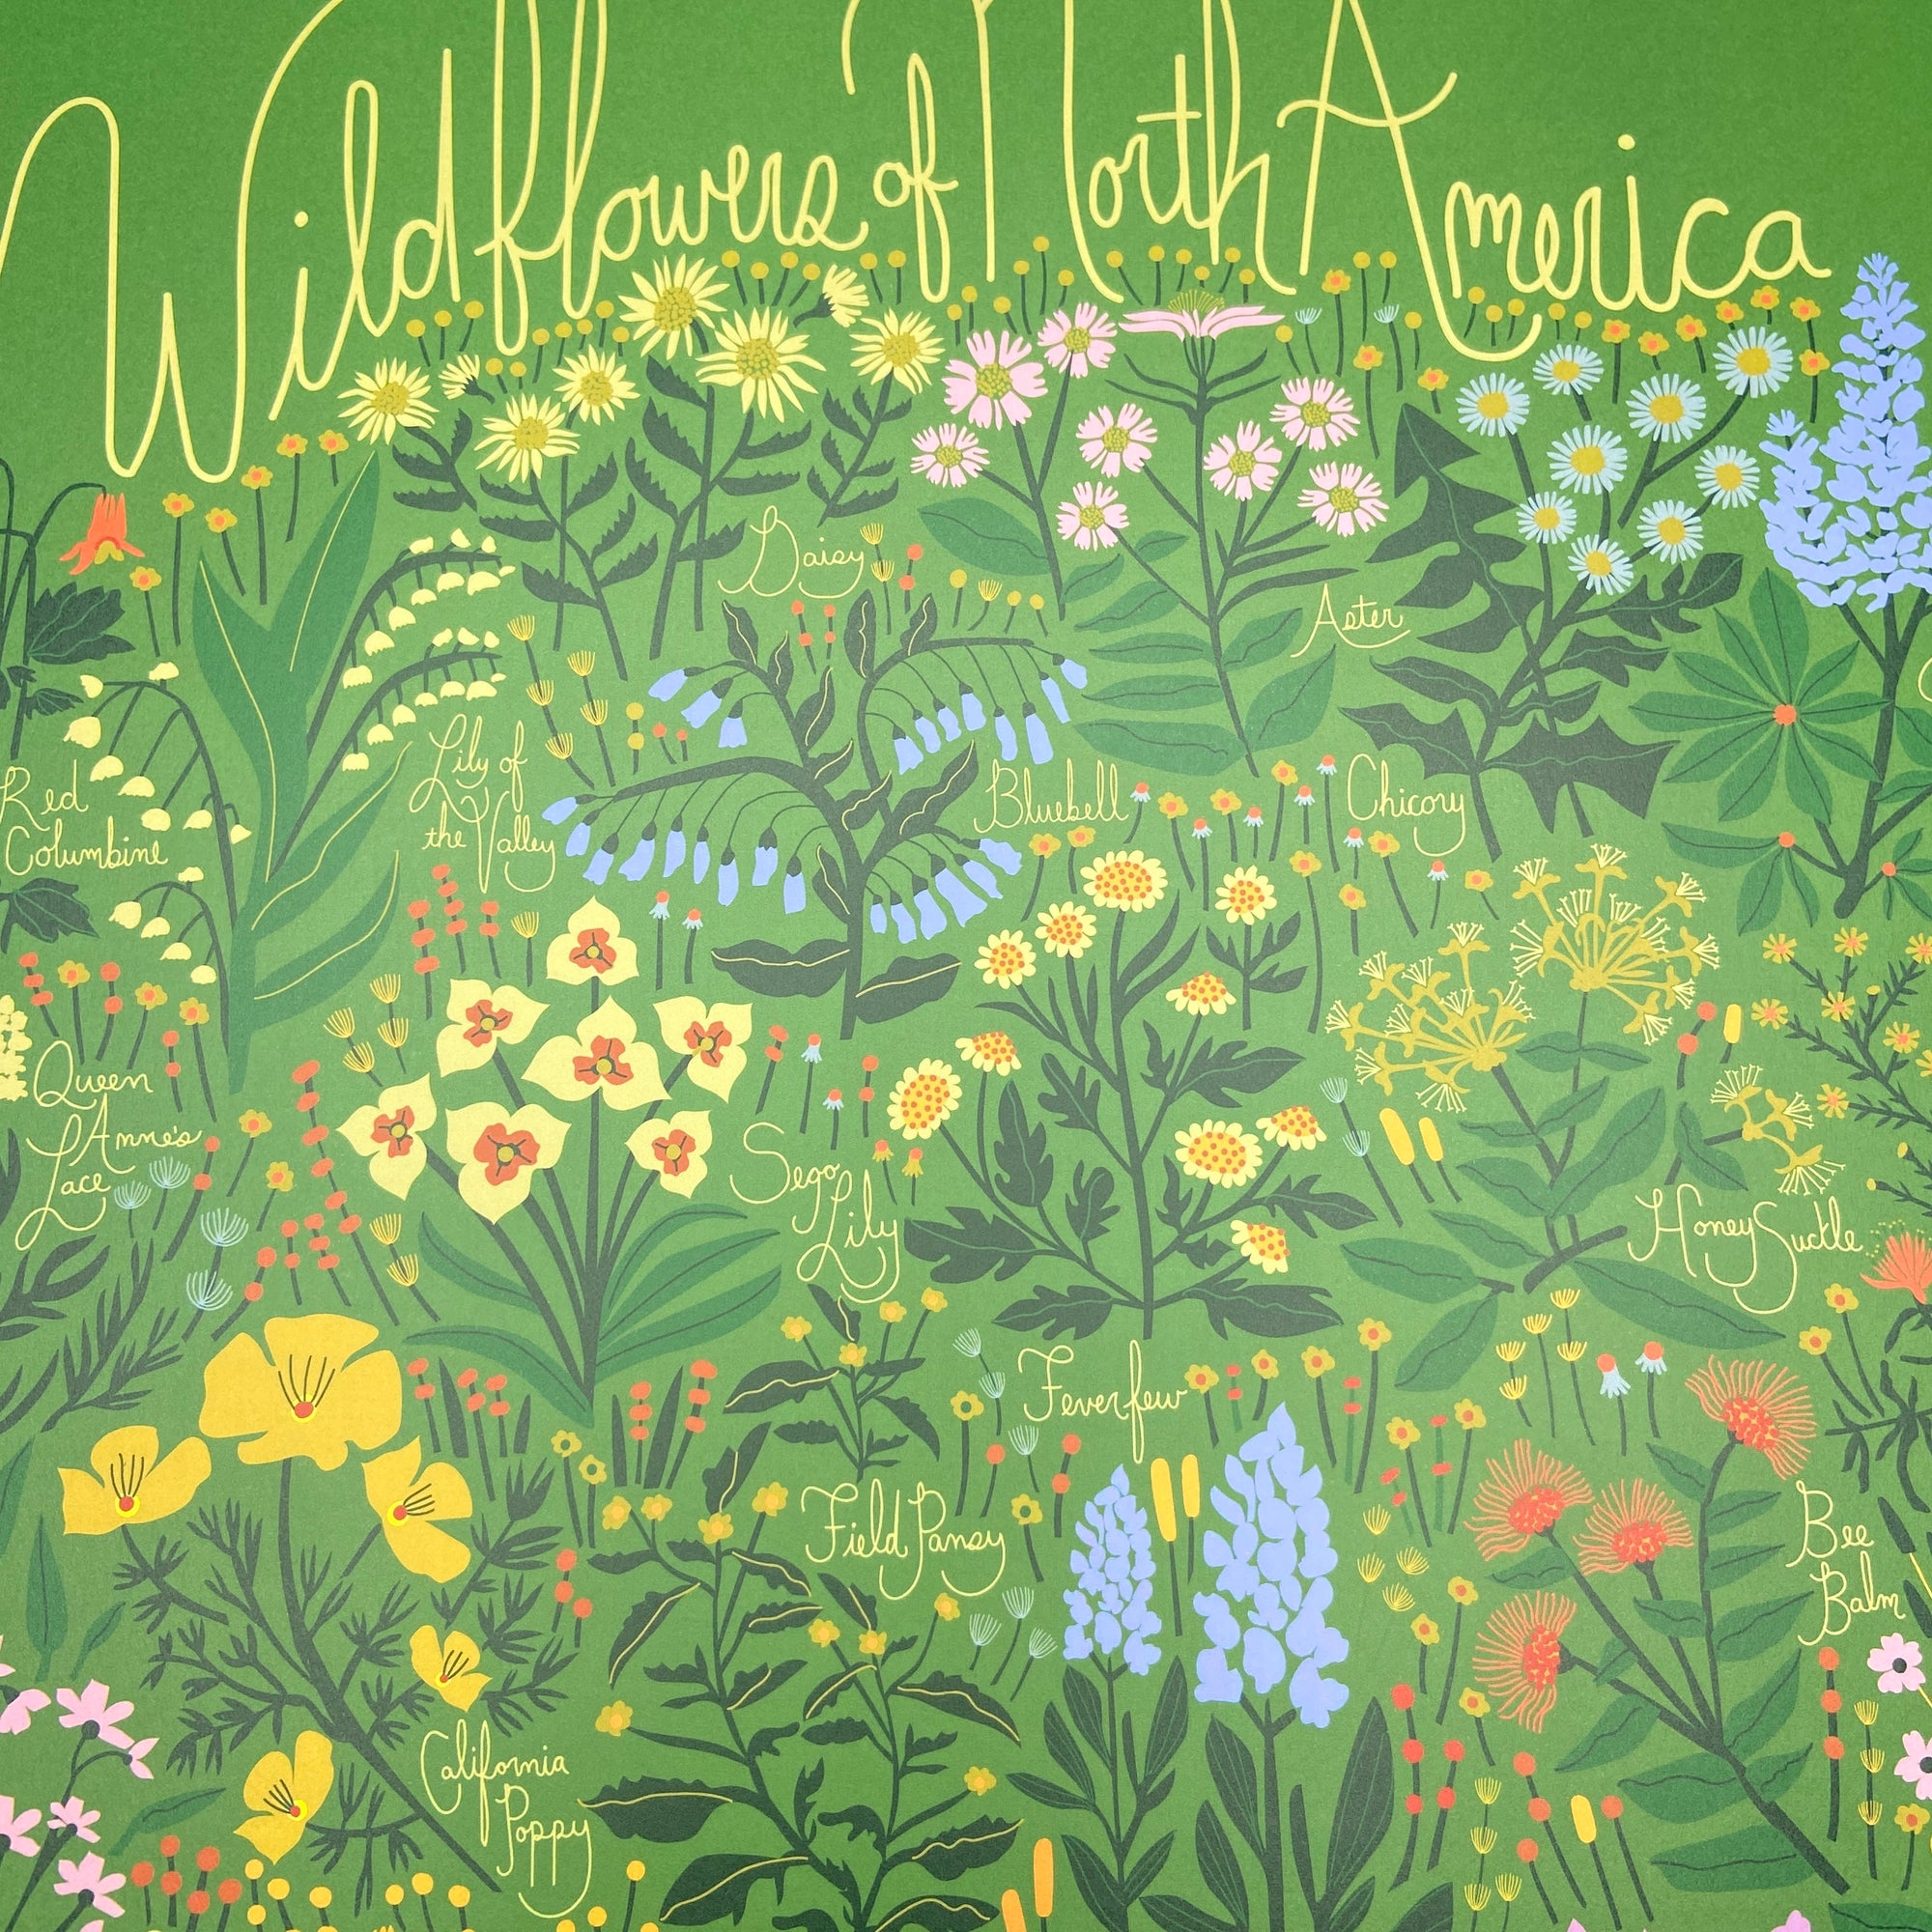 Wildflowers of North America - Print